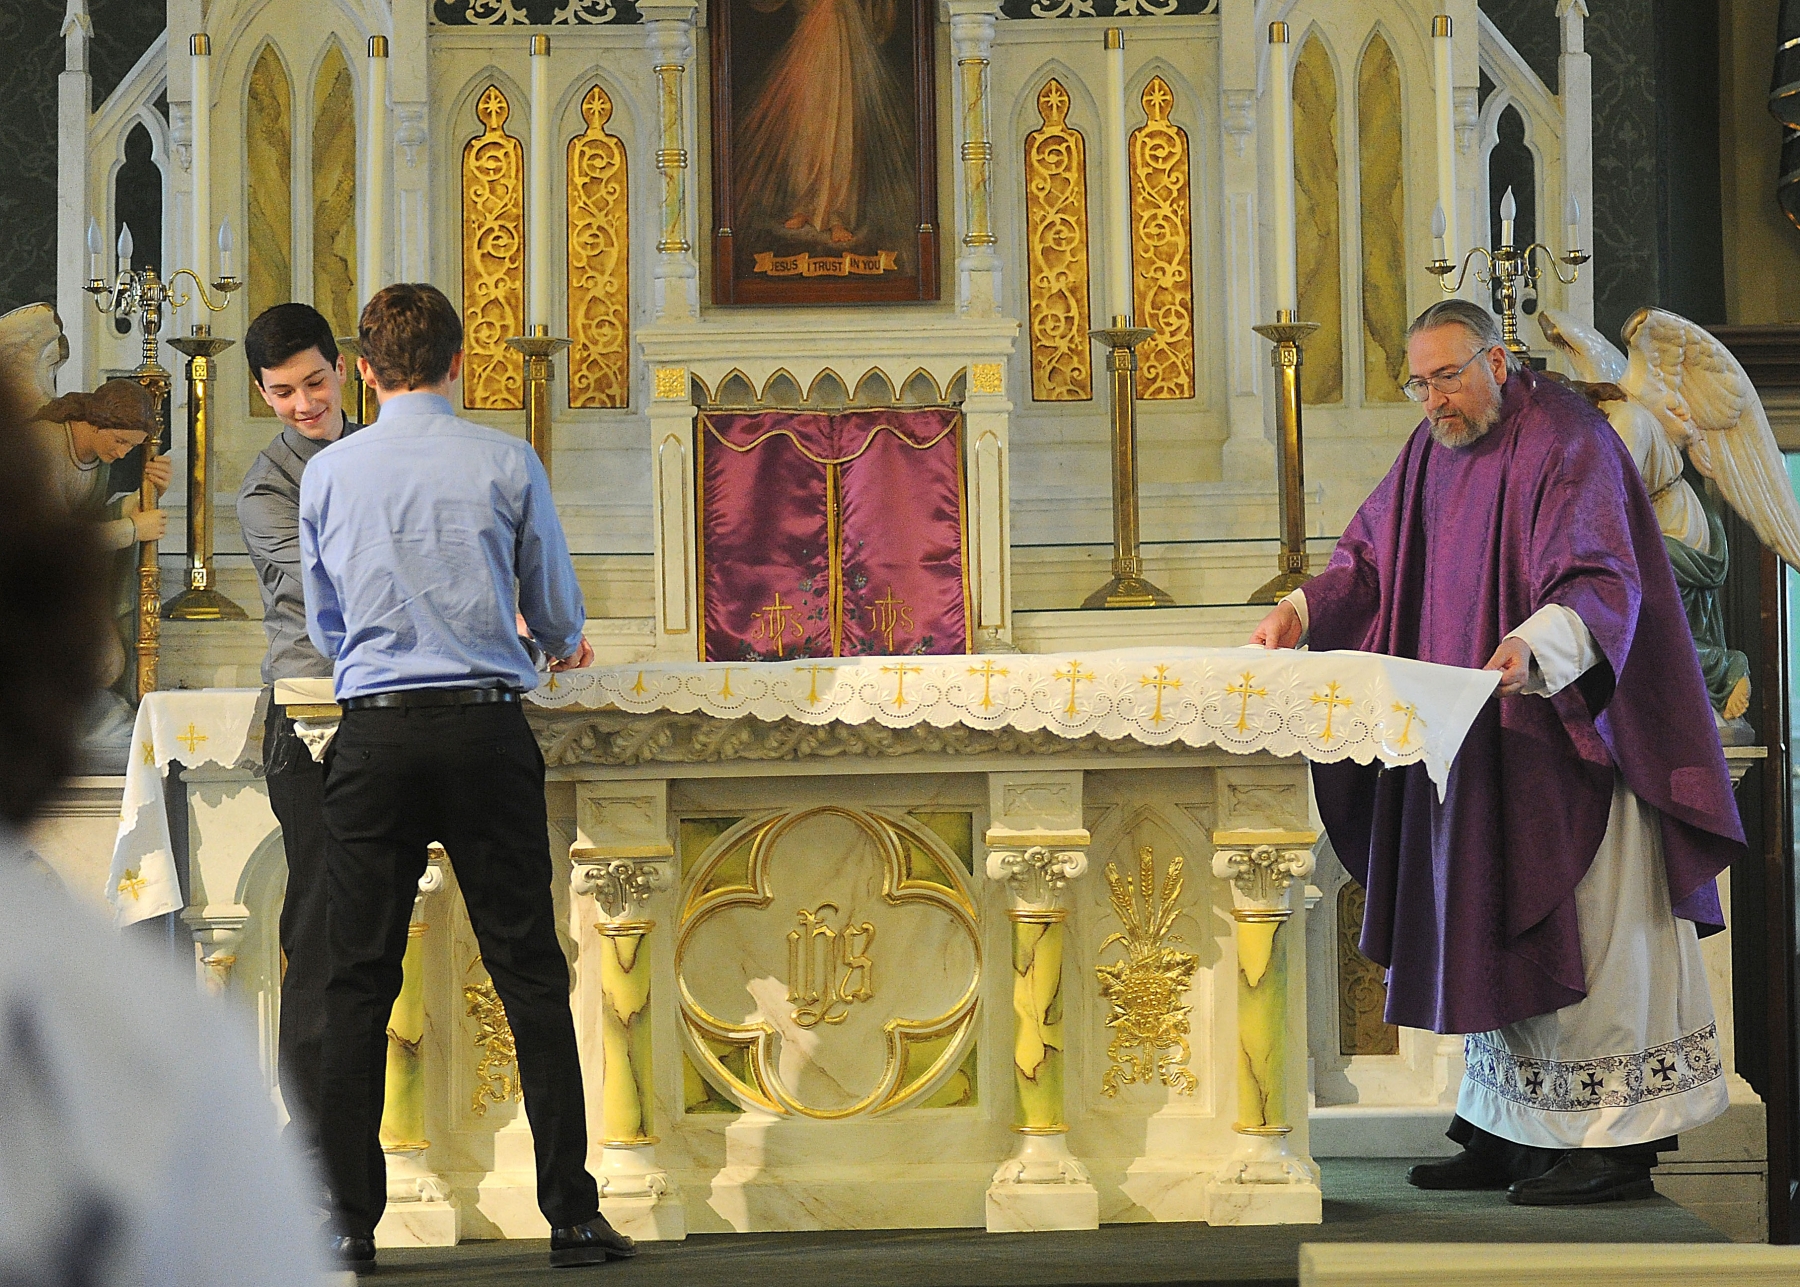 Father Dennis Mancuso prepares the altar at St, Patrick's Church in Belfast. (Dan Cappellazzo/Photographer)